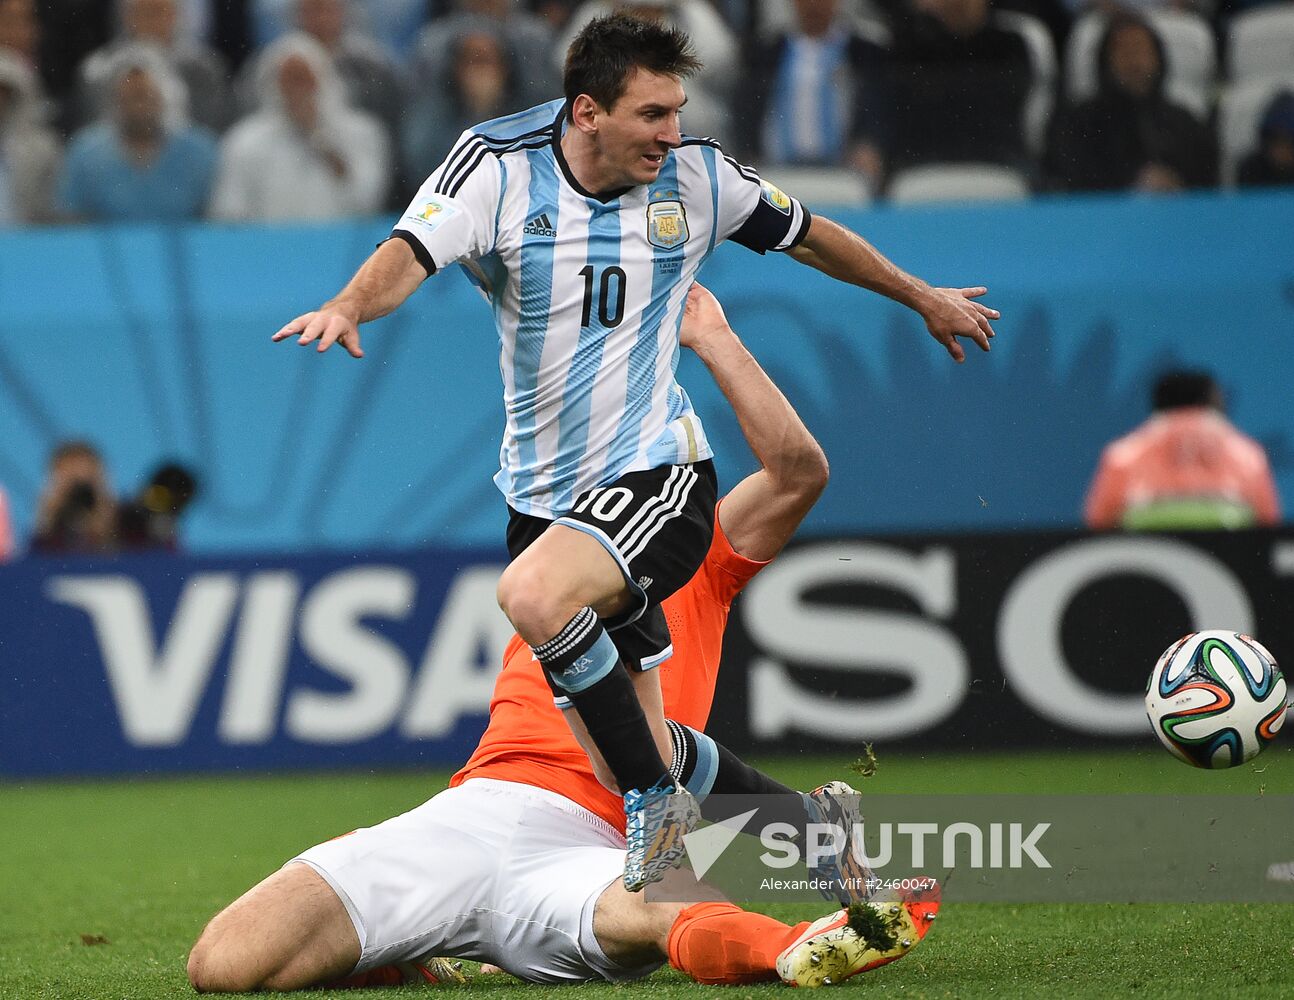 Football. FIFA World Cup 2014. Netherlands - Argentina